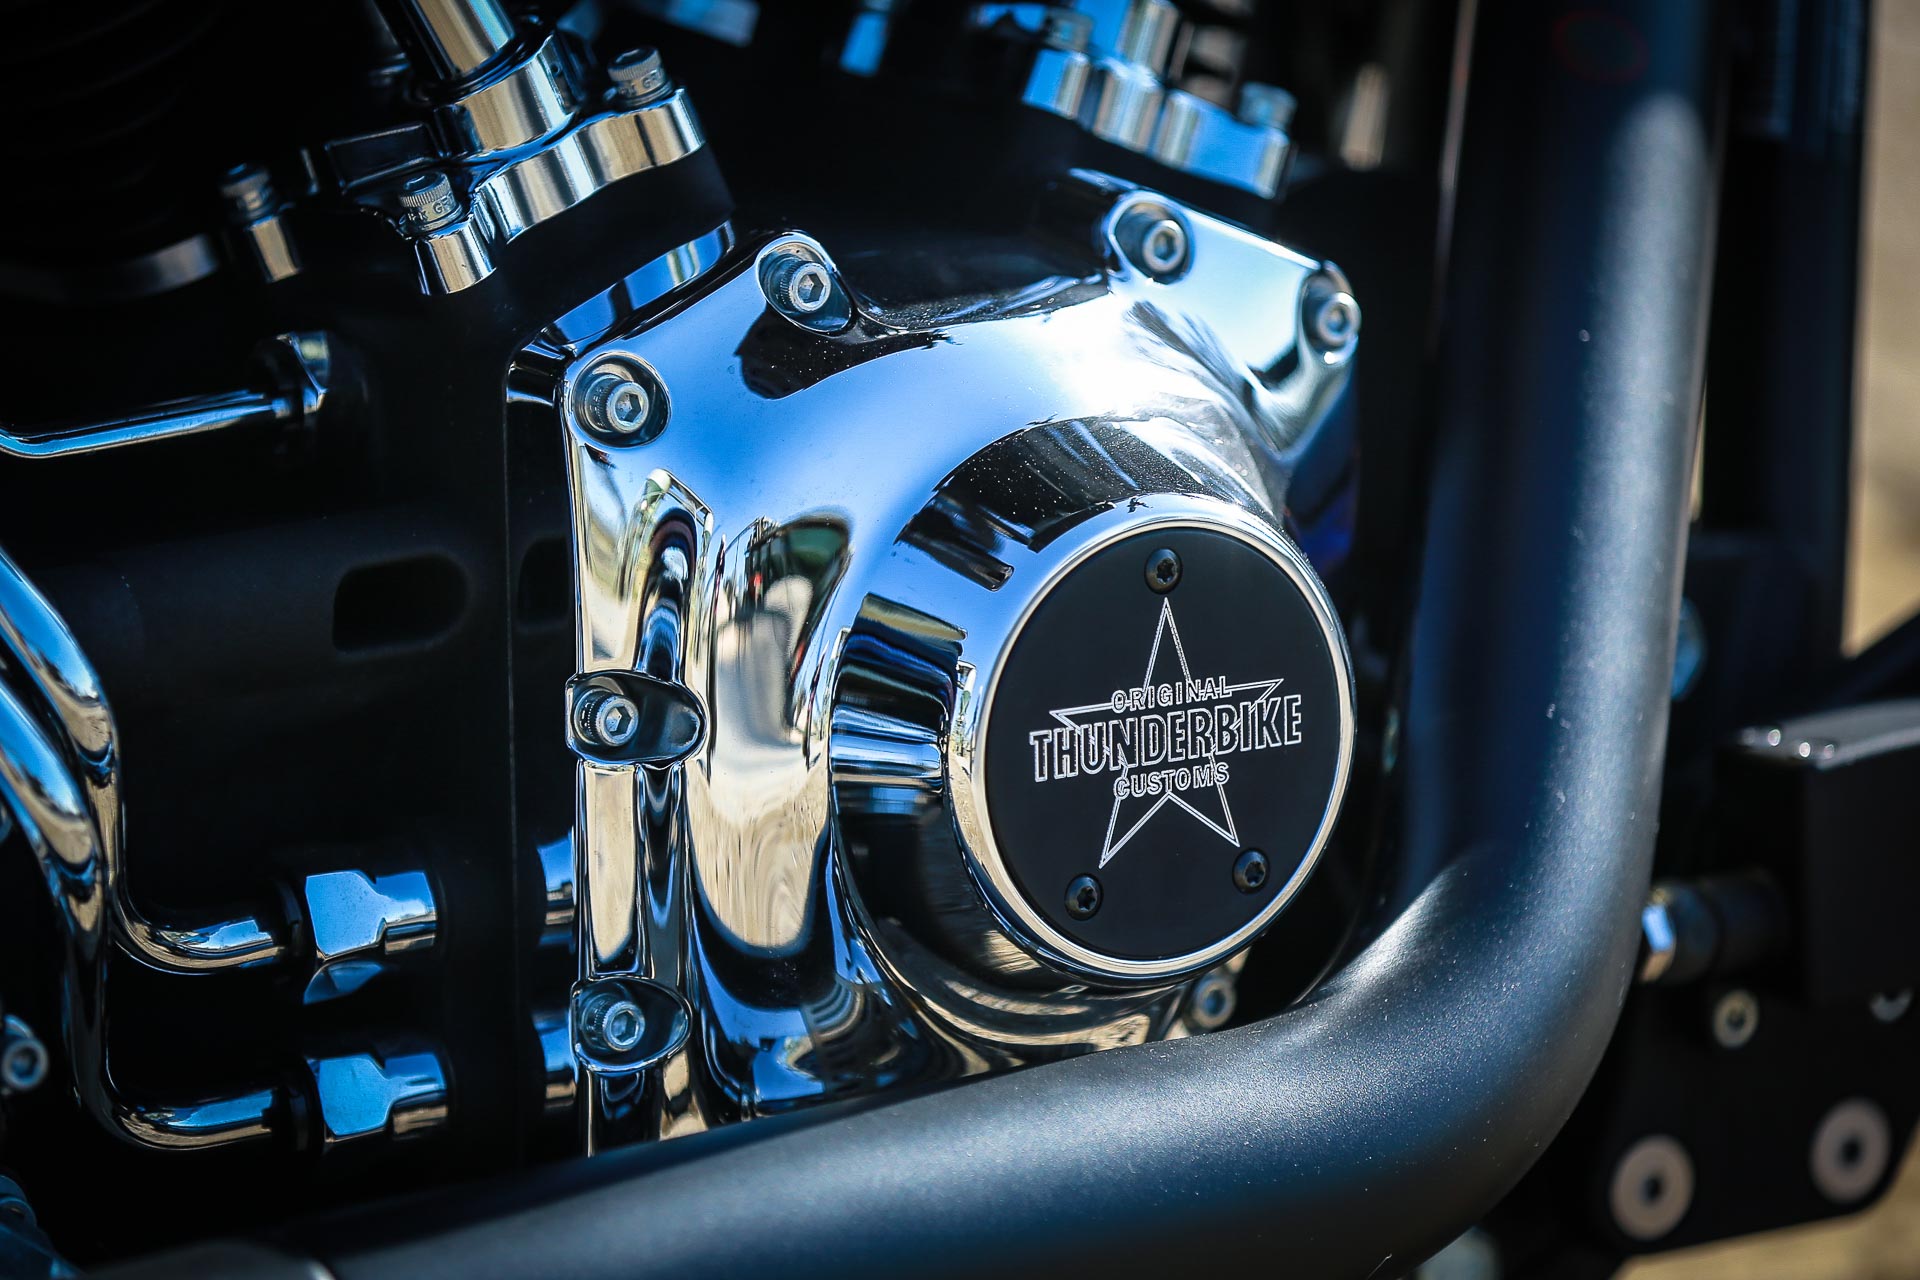 Customized Harley-Davidson Softail Blackline motorcycles by Thunderbike